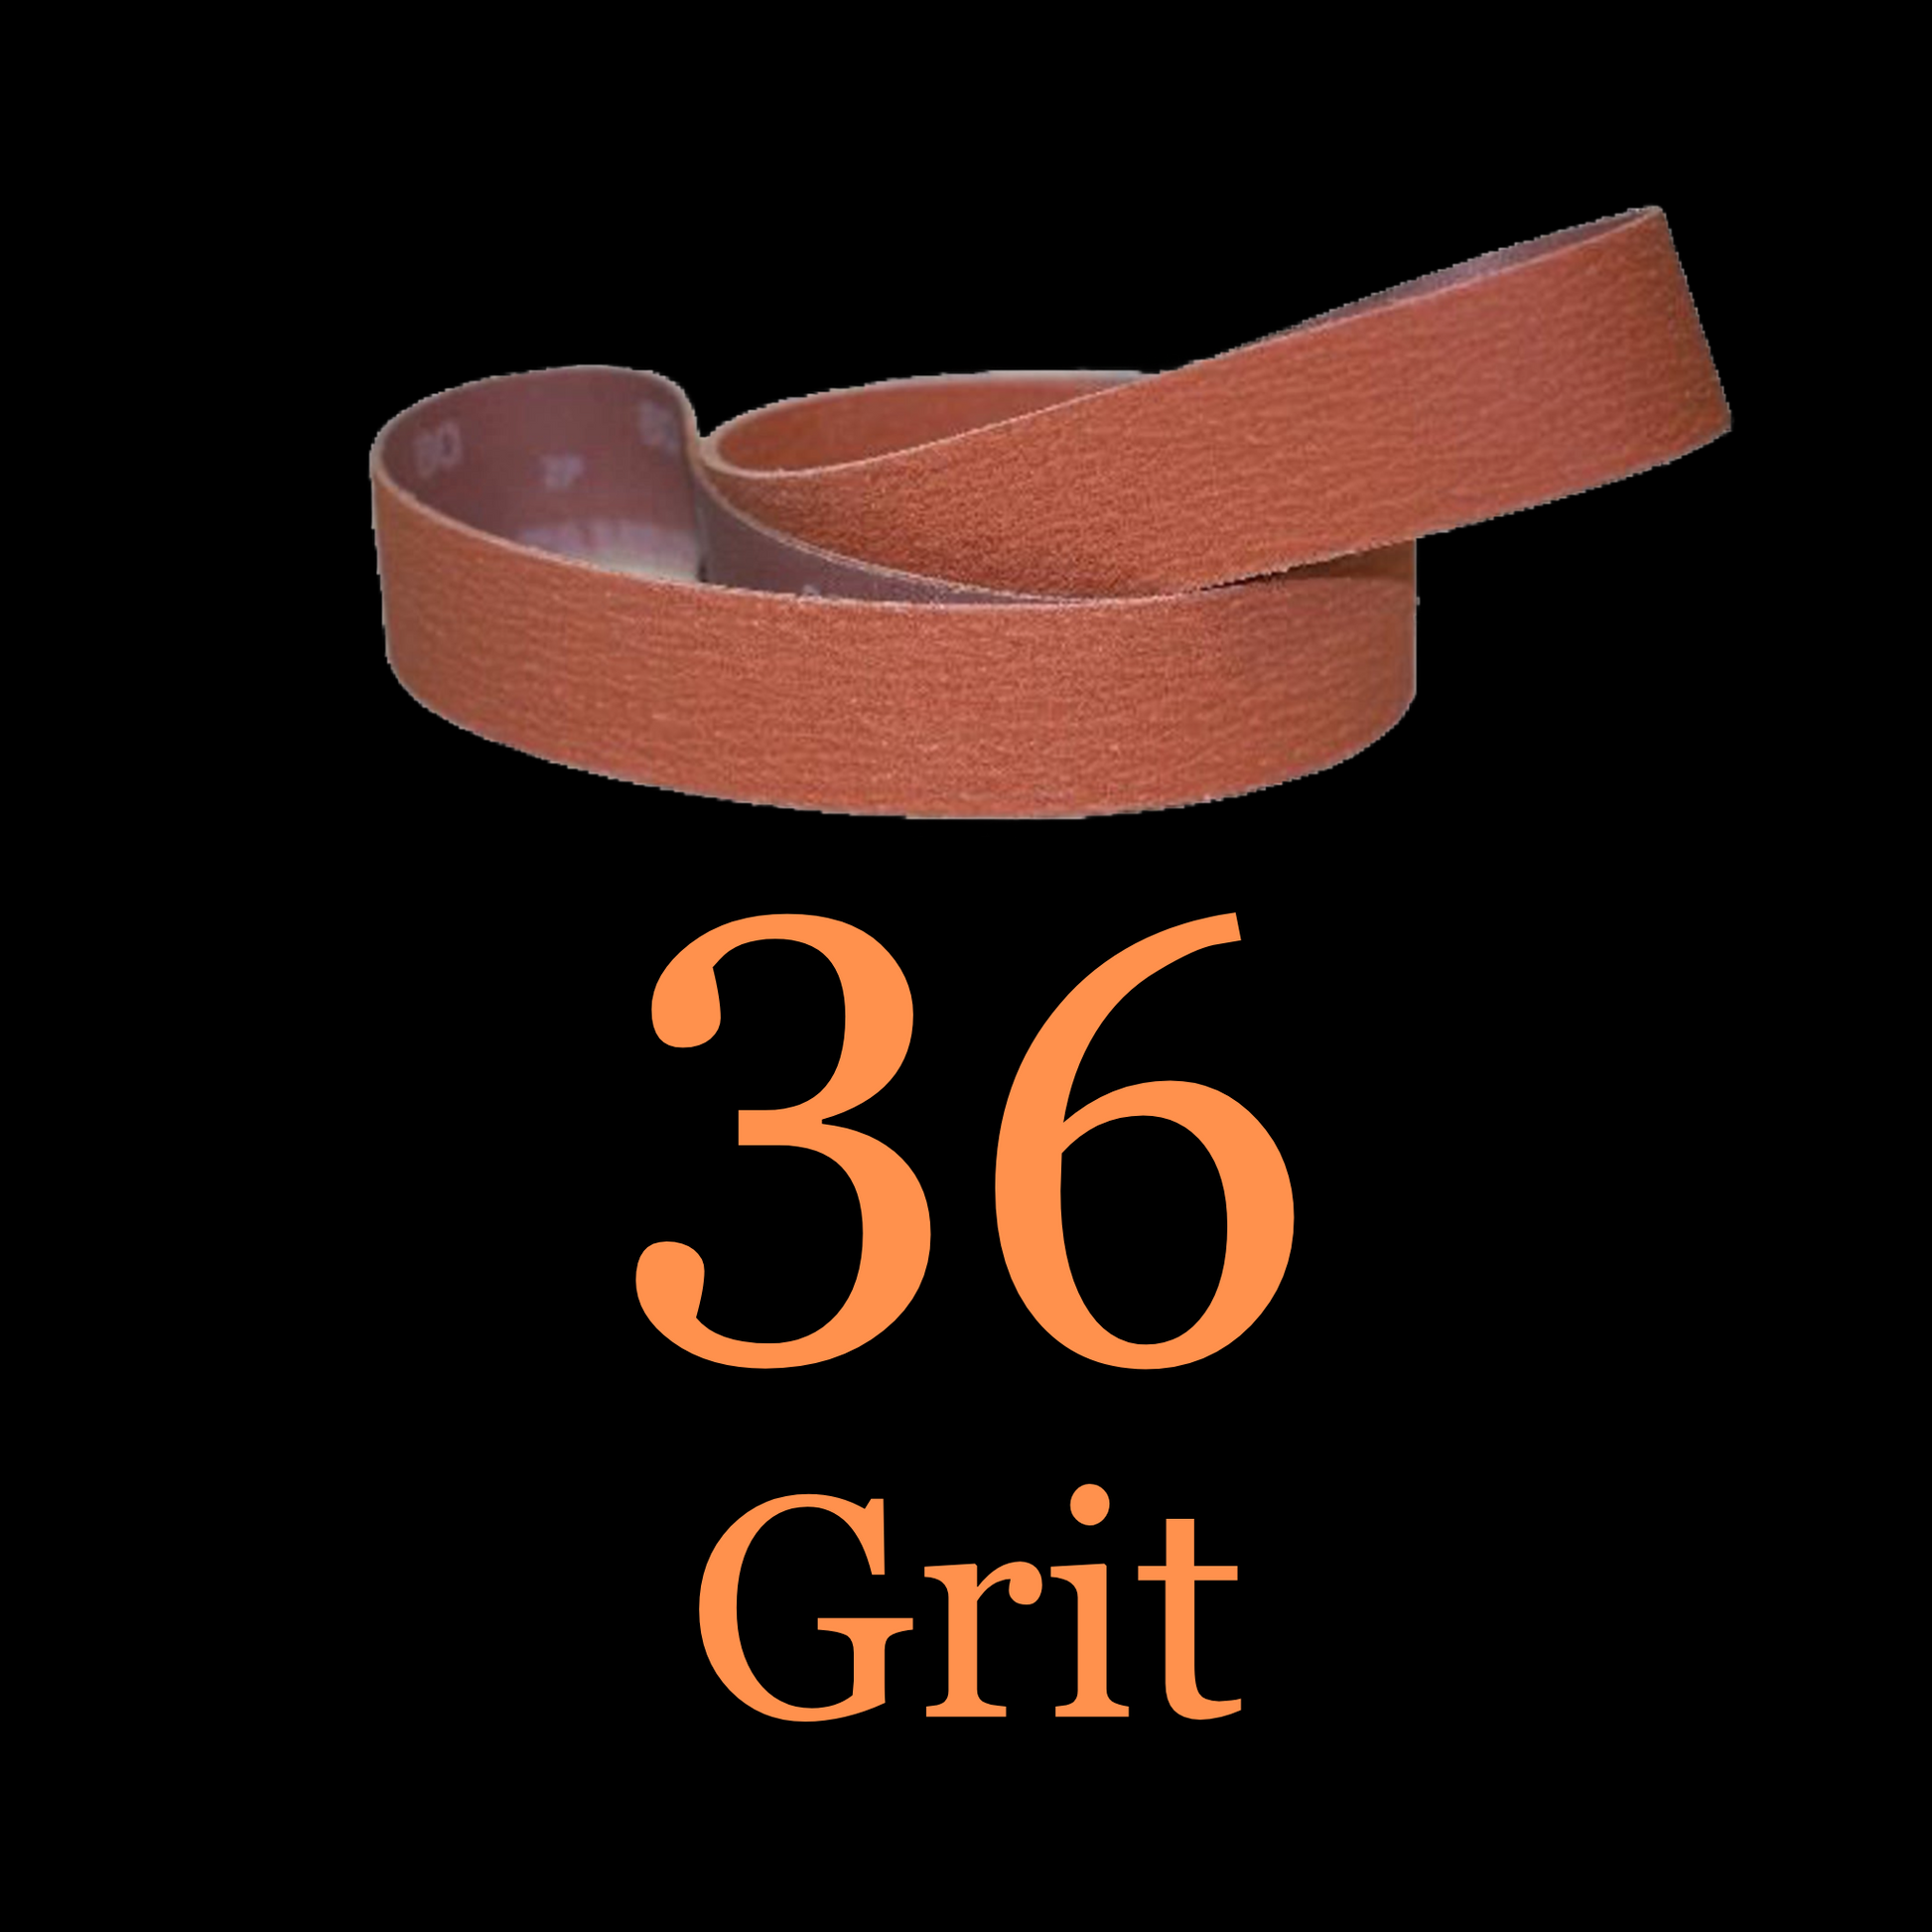 1” x 30” Blaze Ceramic Belt 36 Grit